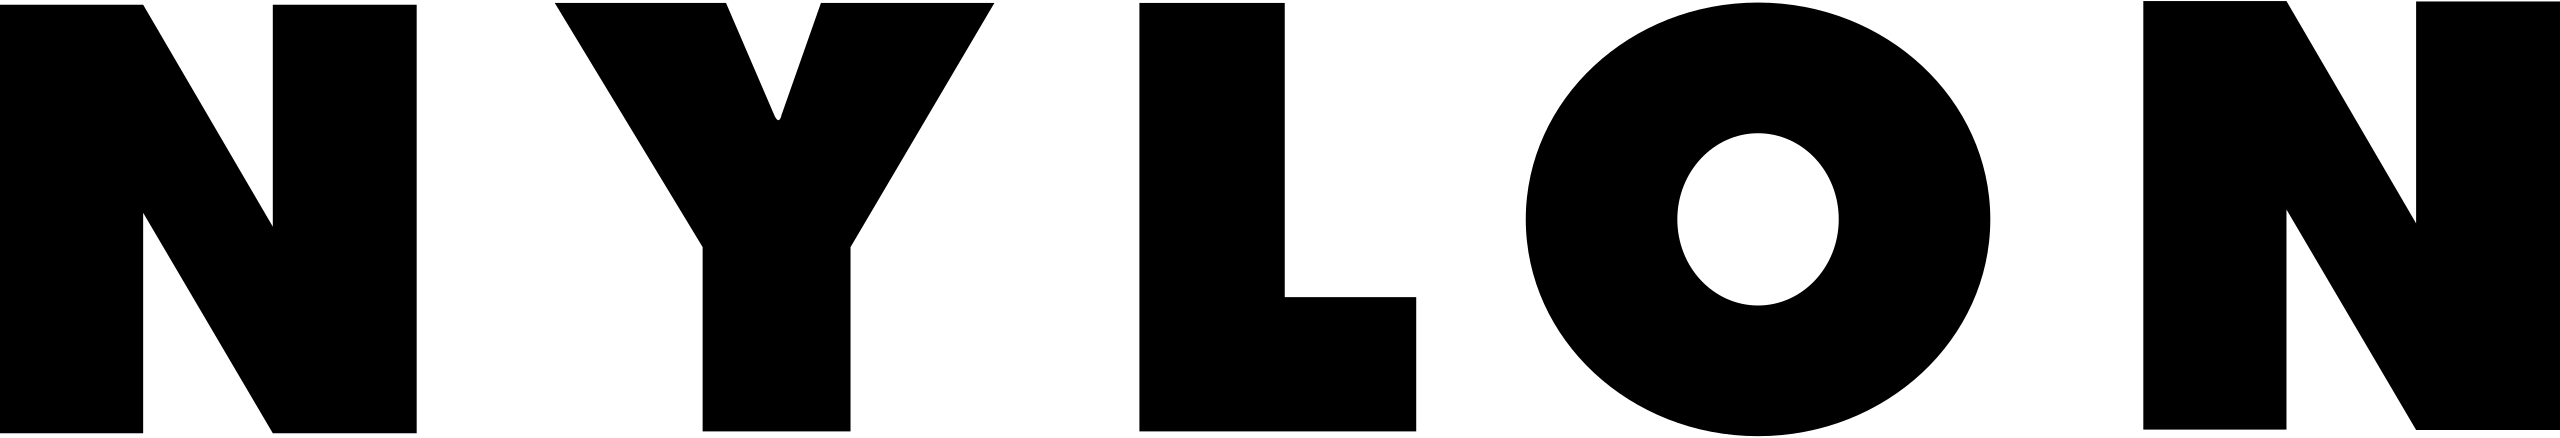 File:Nylon magazine logo.svg - Wikimedia Commons